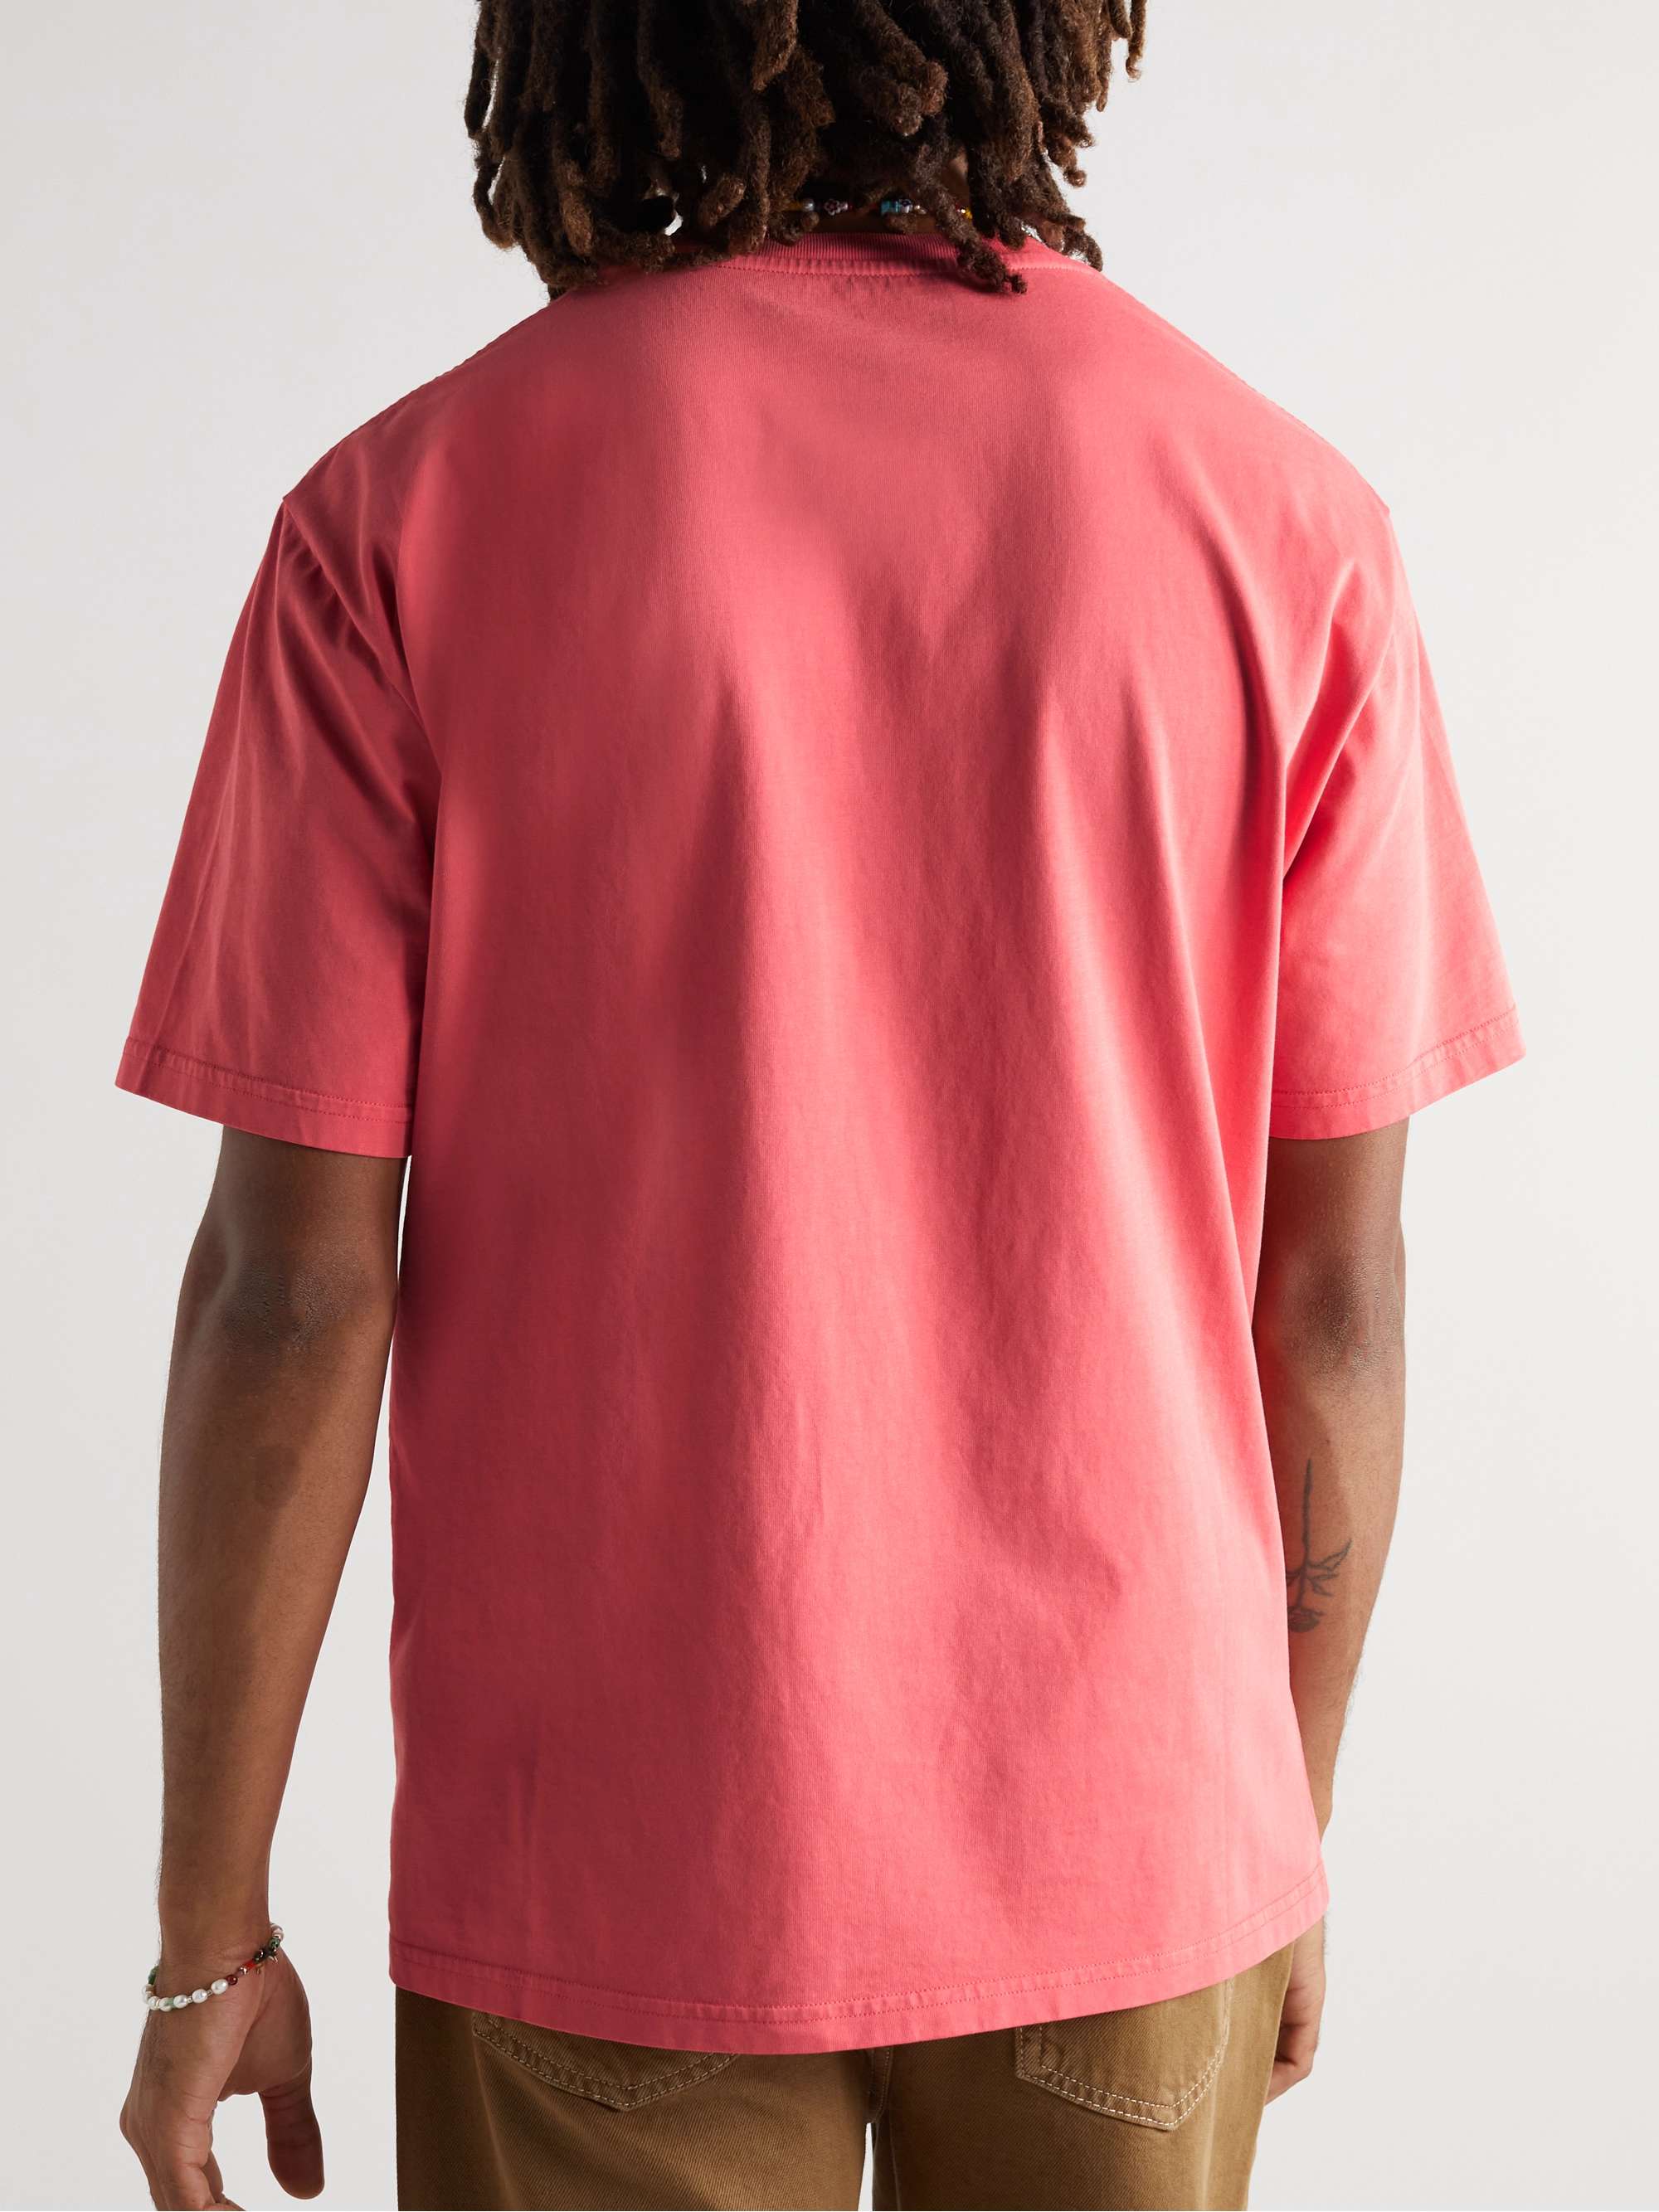 MANAAKI Maunga Printed Cotton-Jersey T-Shirt